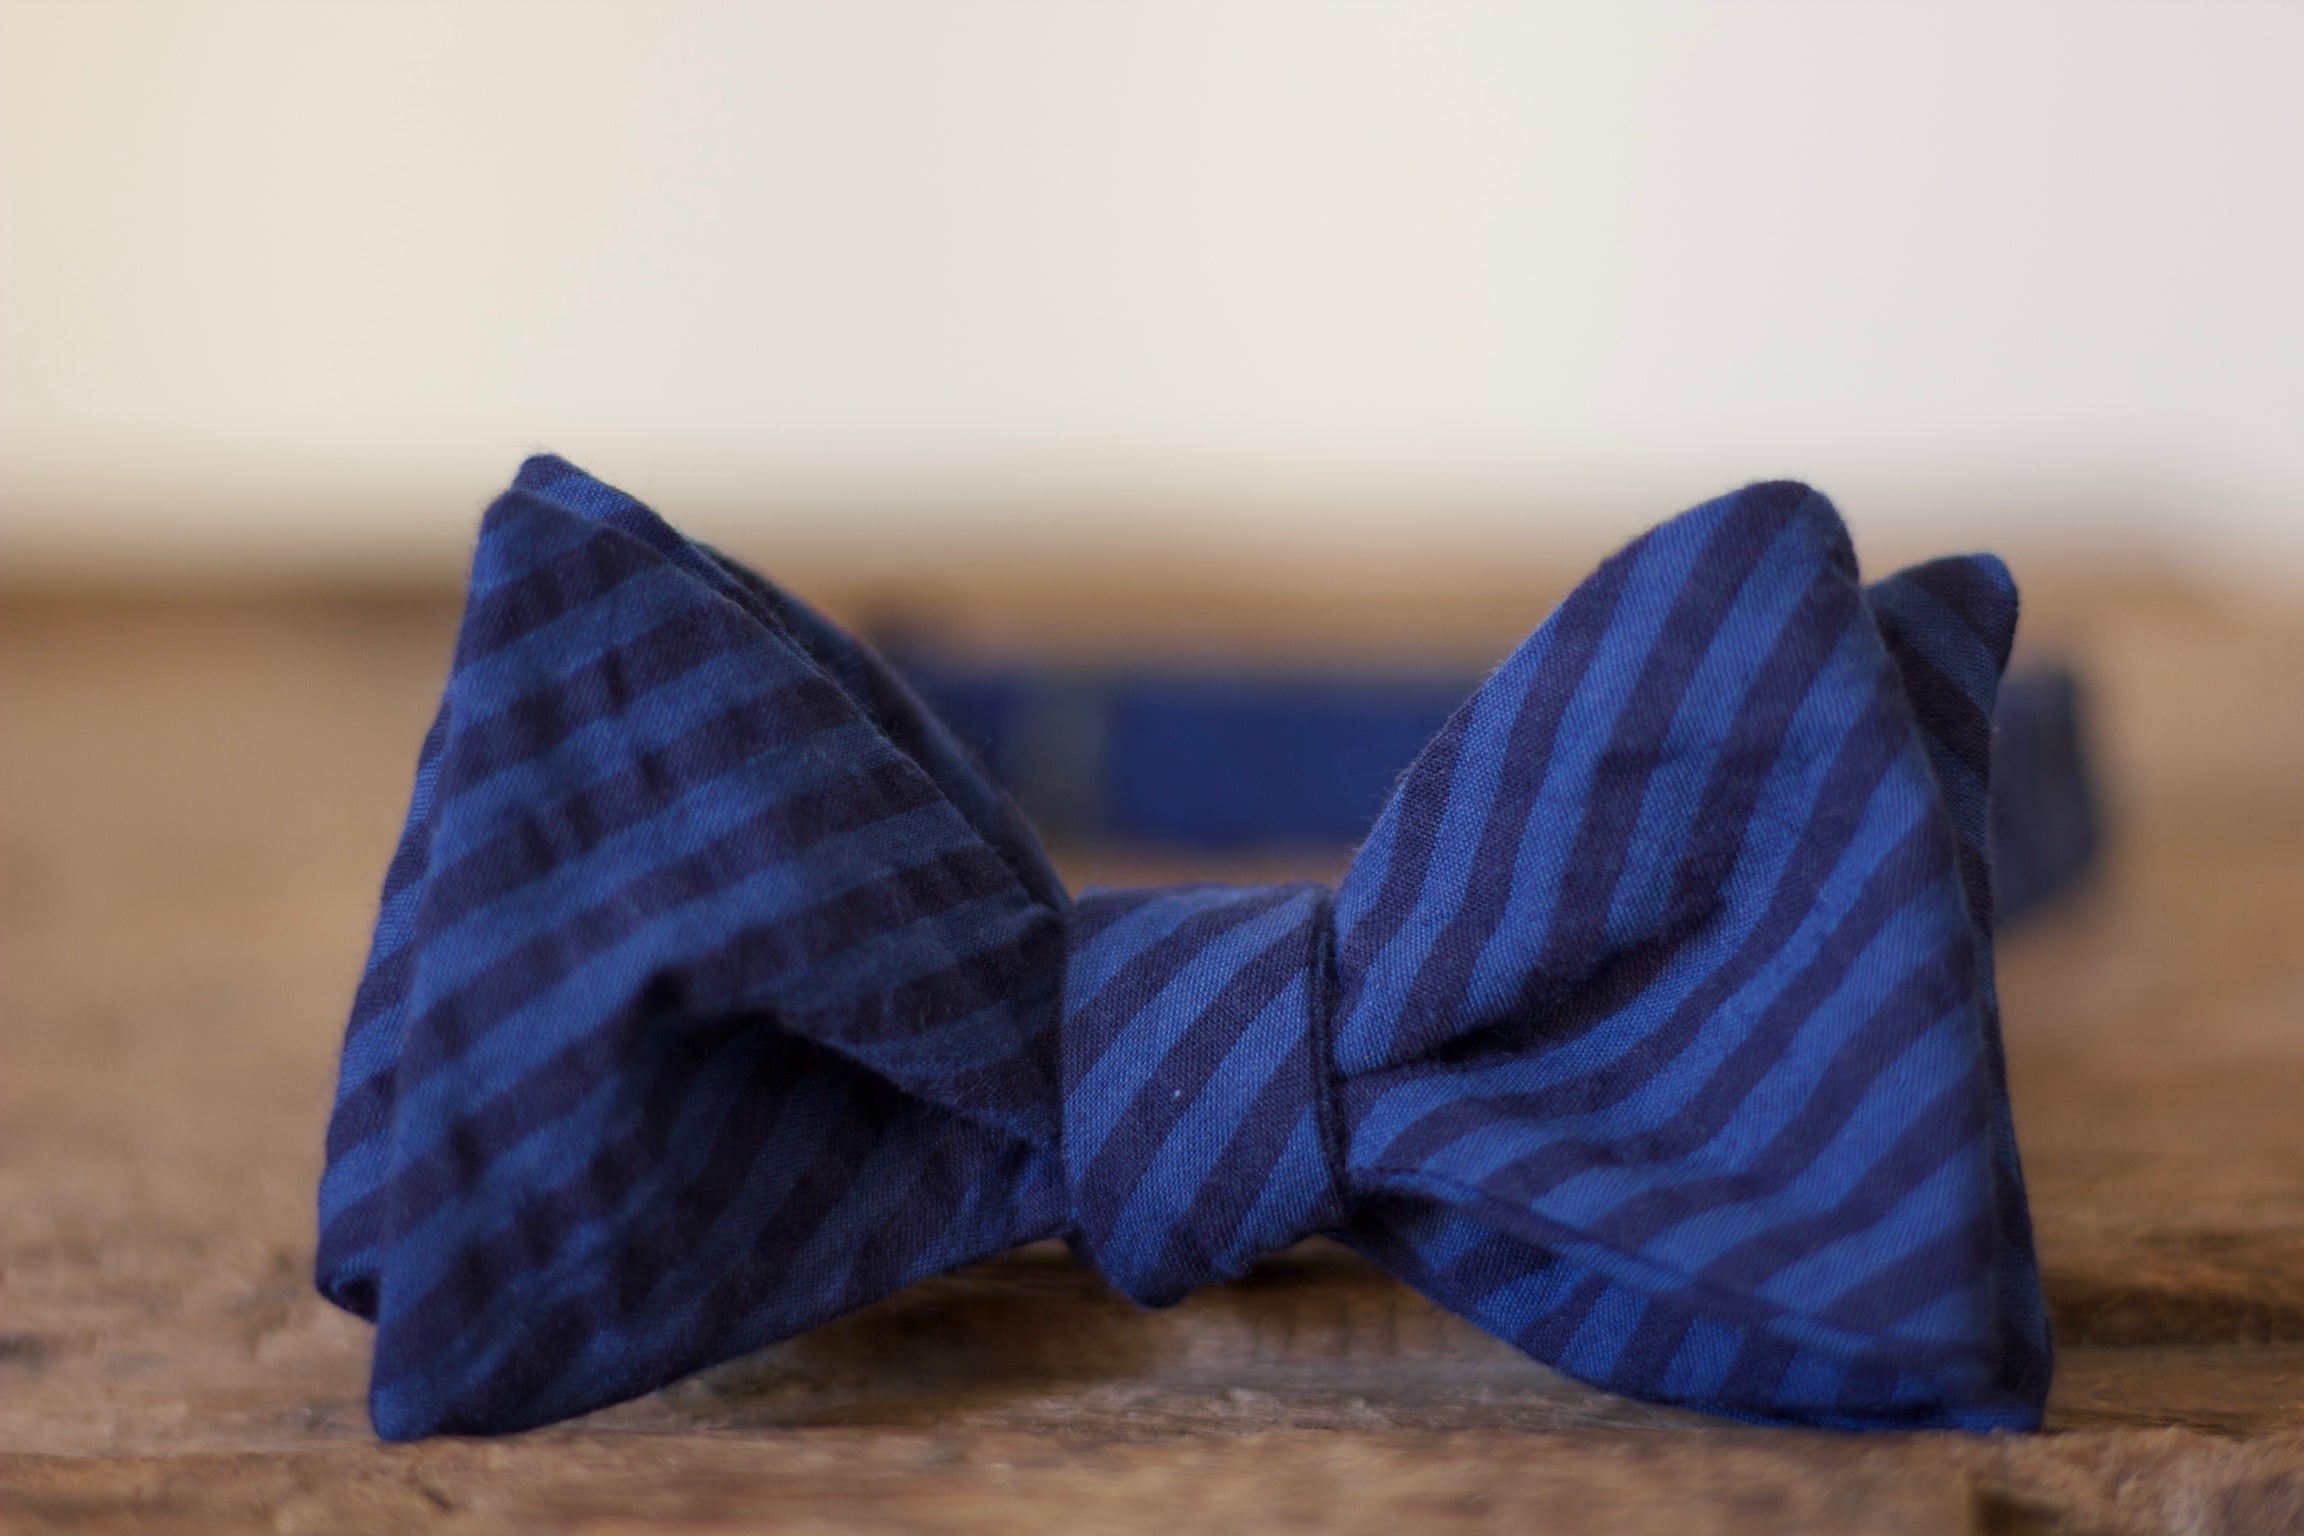 Noodles - Bow Ties - Japanese Cotton - Navy blue and indigo stripes seersucker